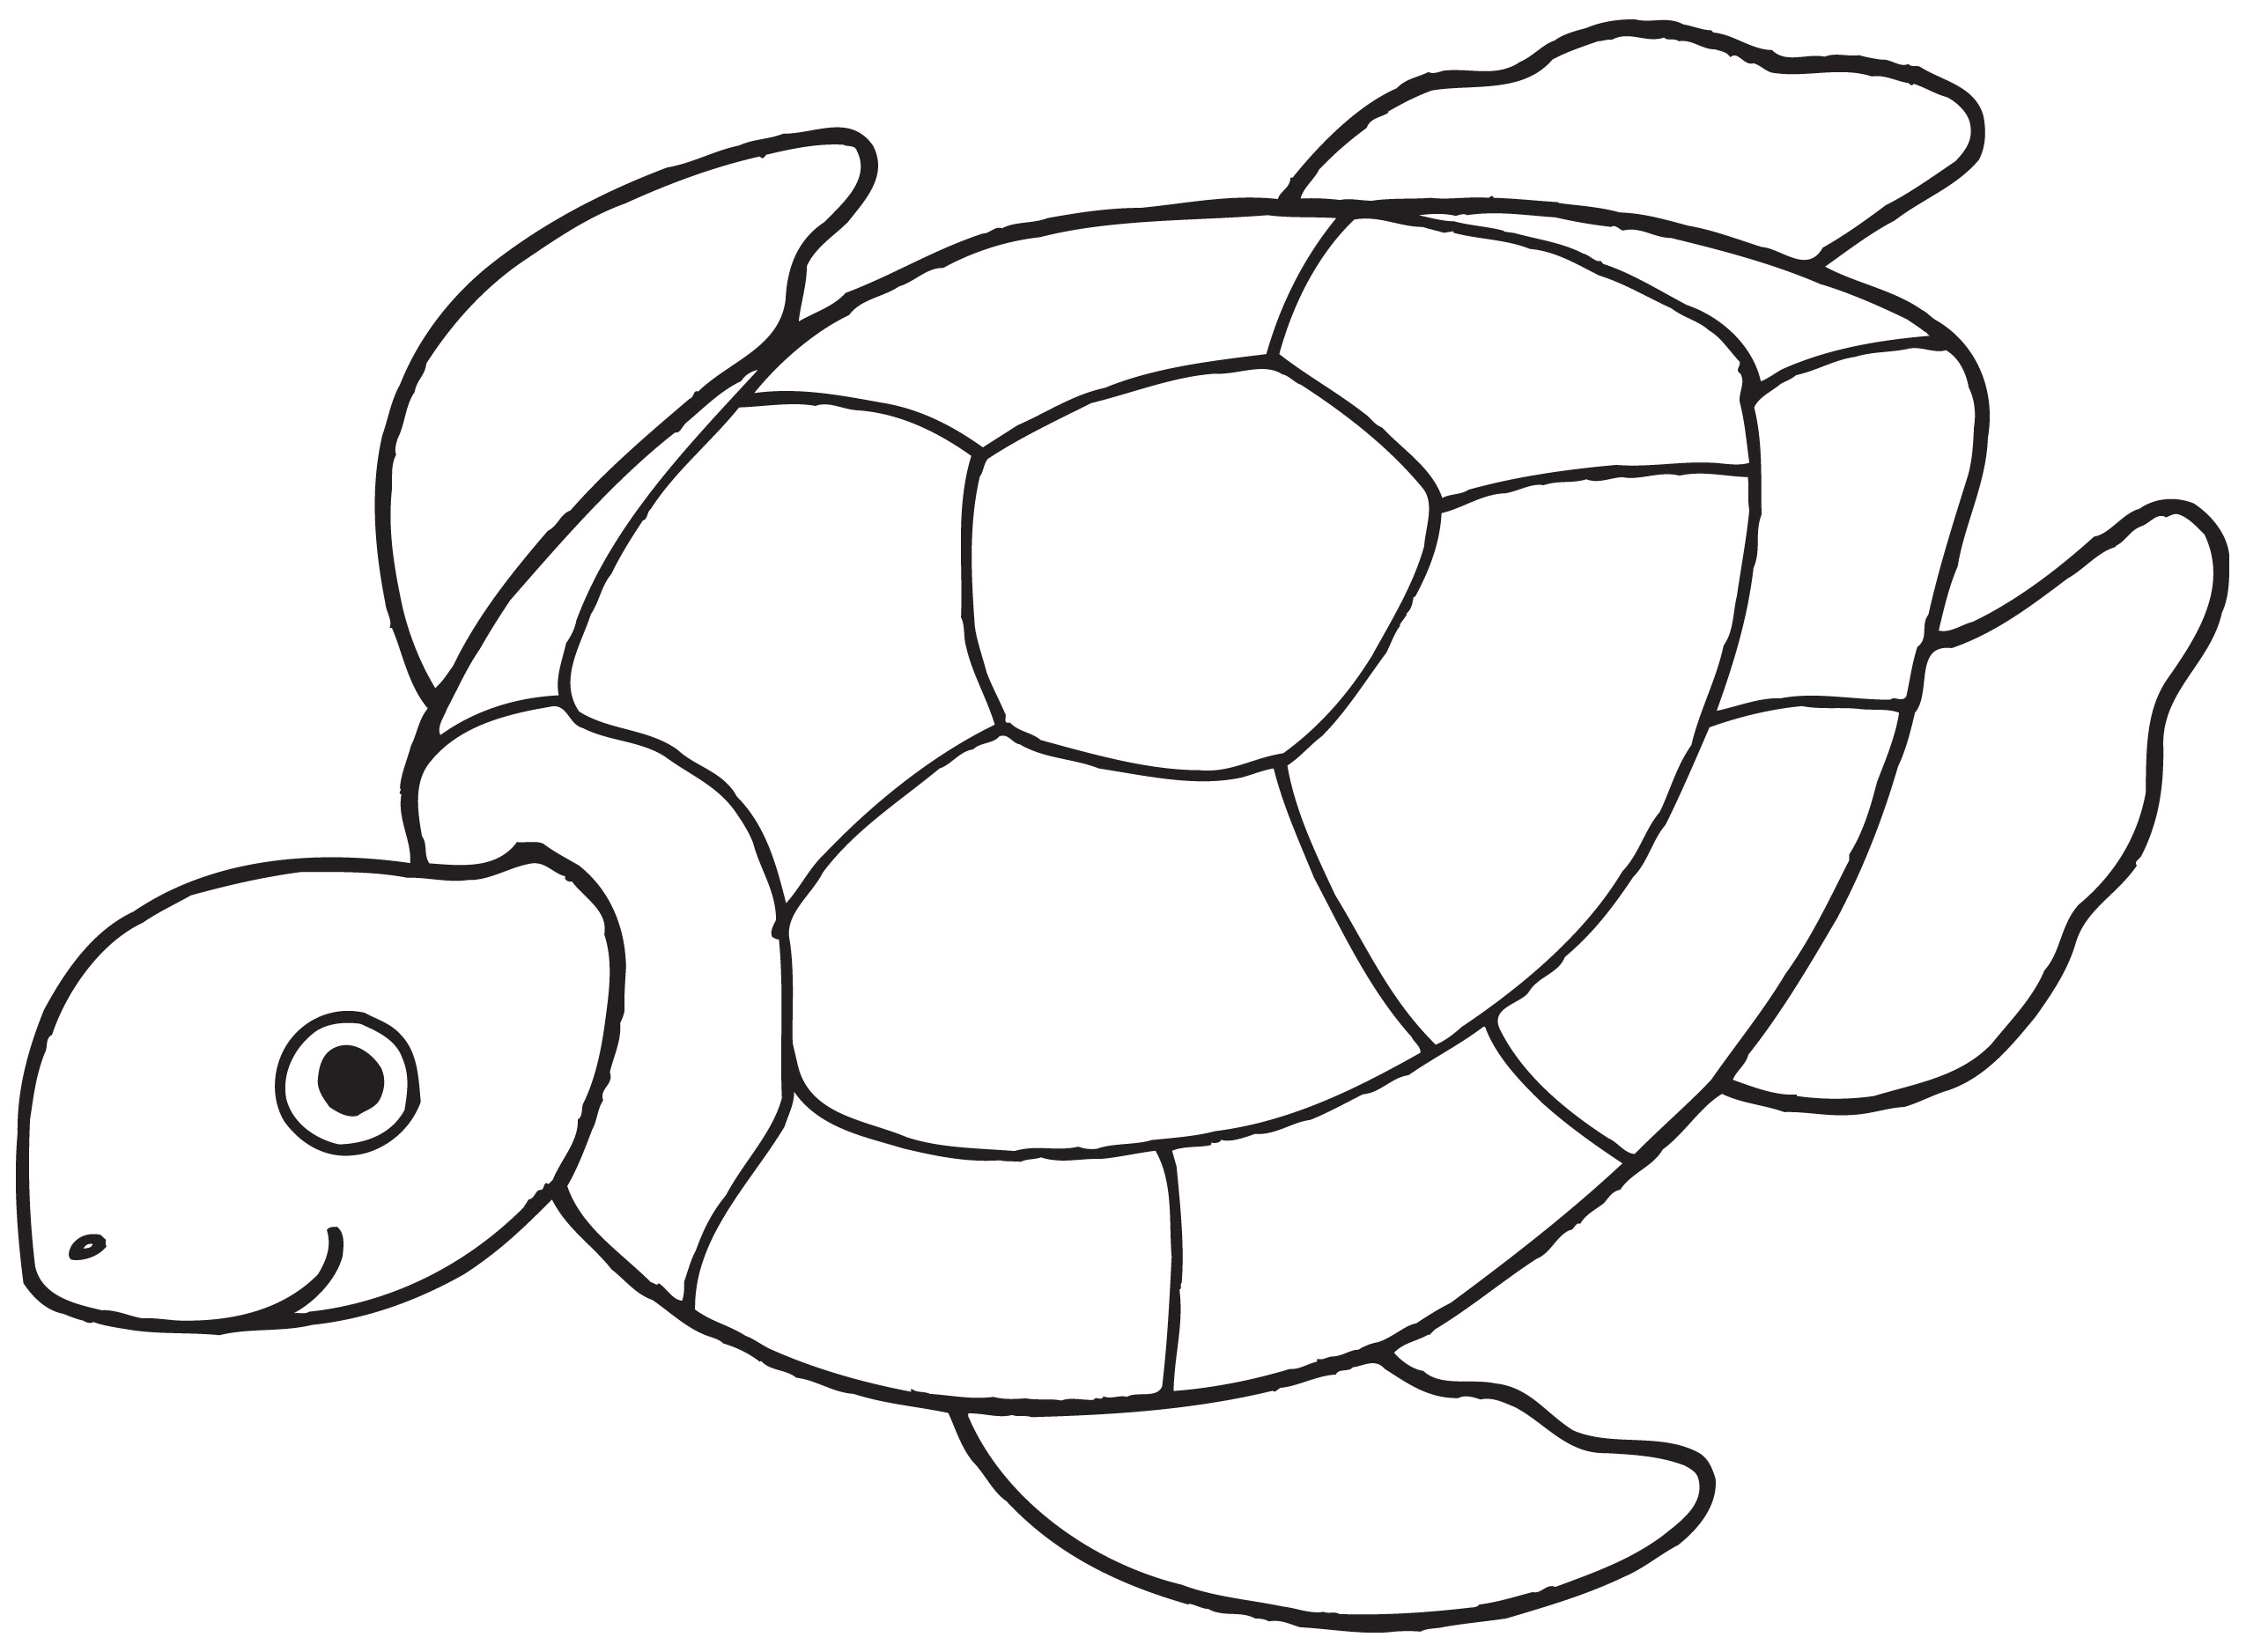 Sea turtle clipart black and white free clipart